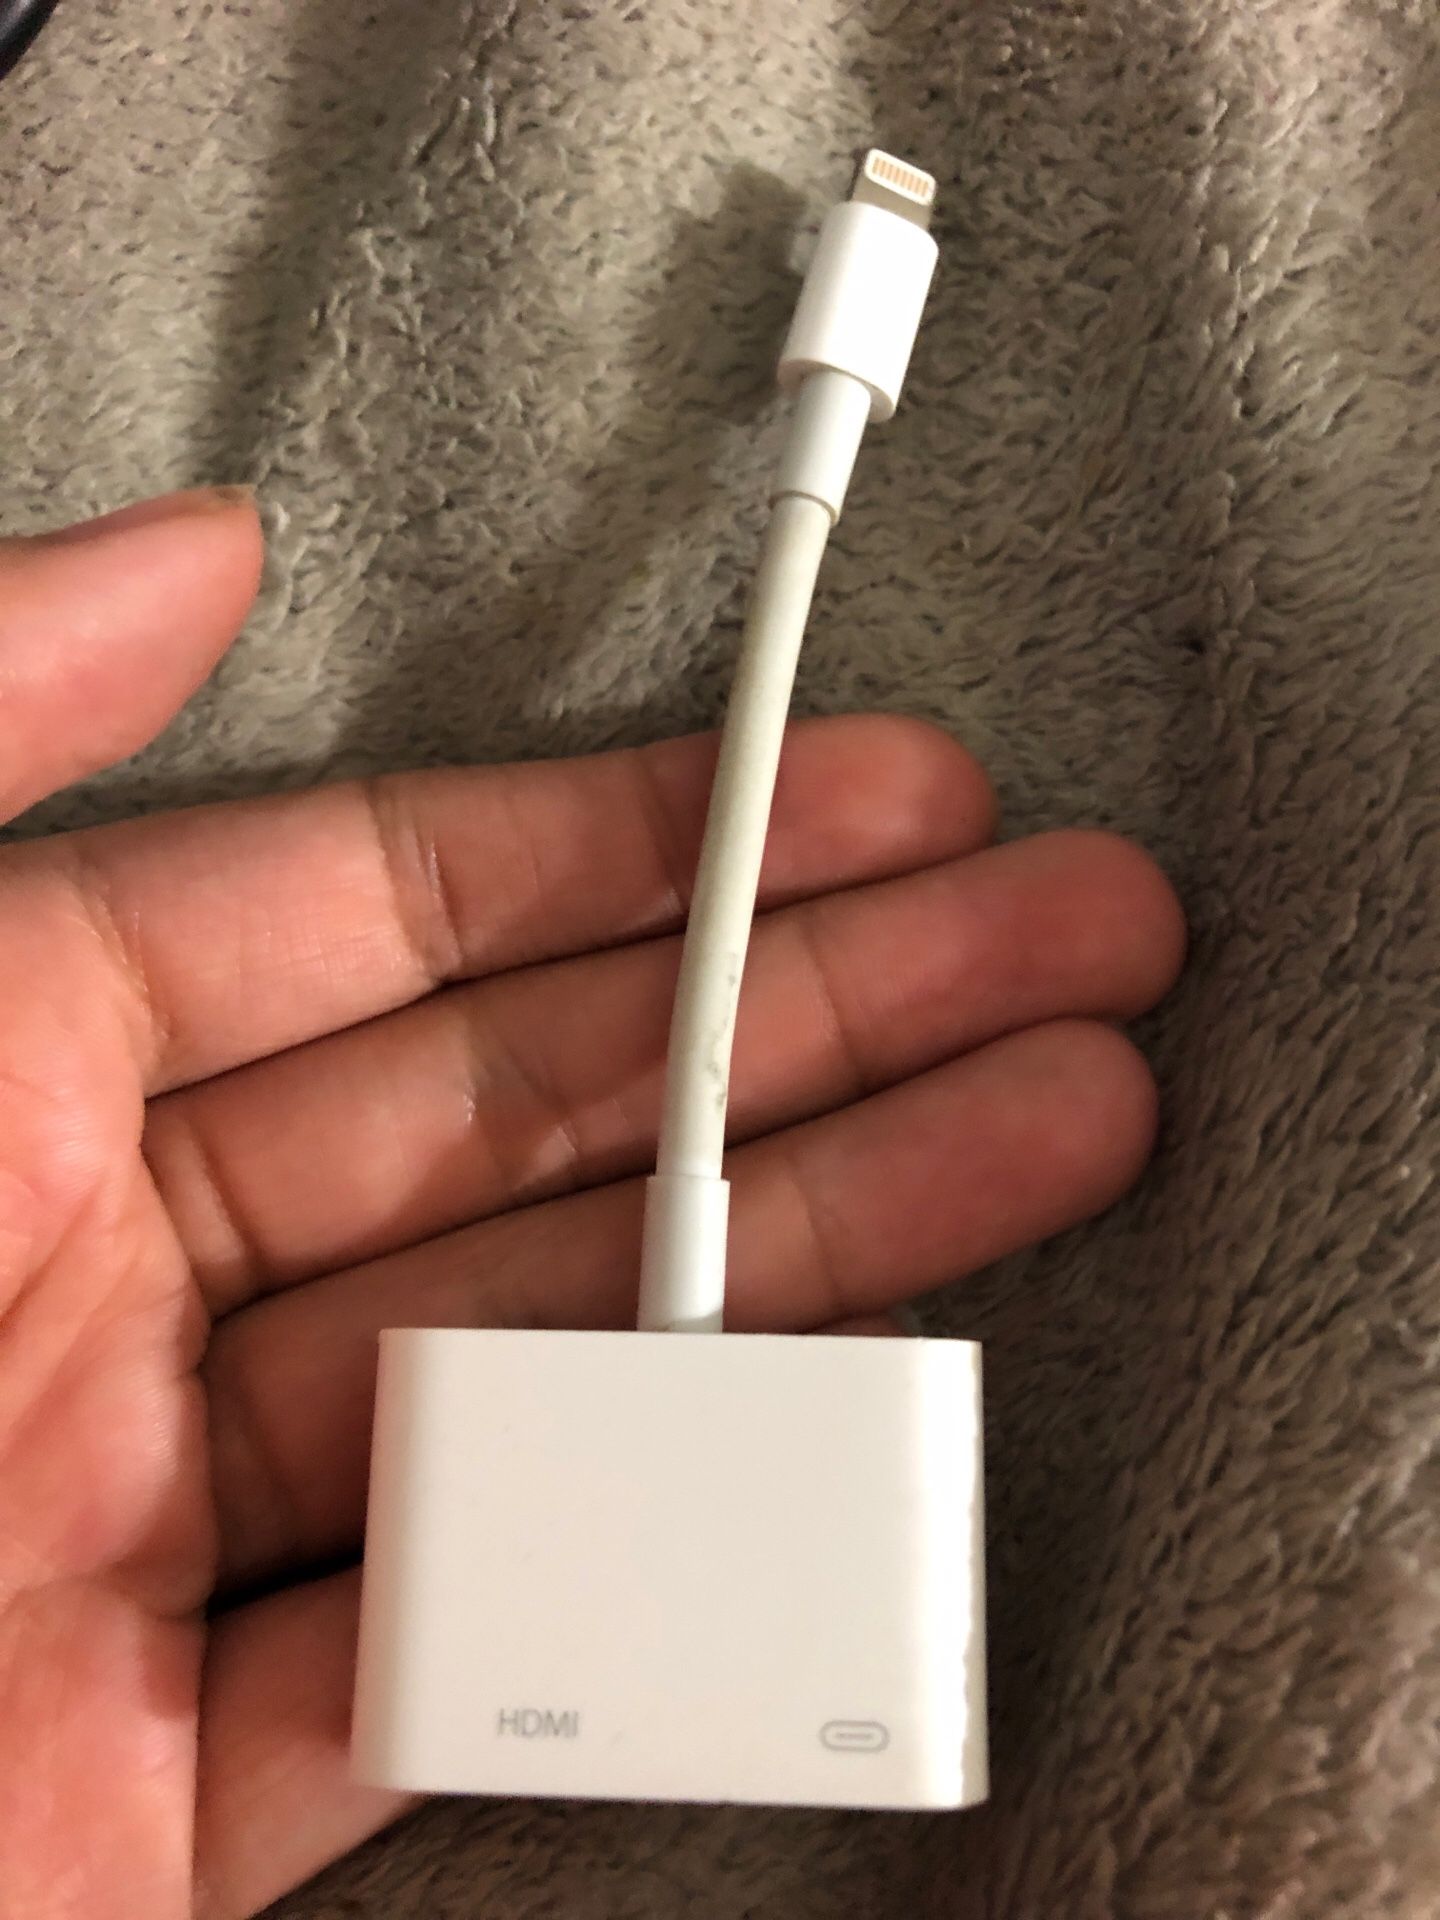 Apple TV Adapter & HDMI Cord